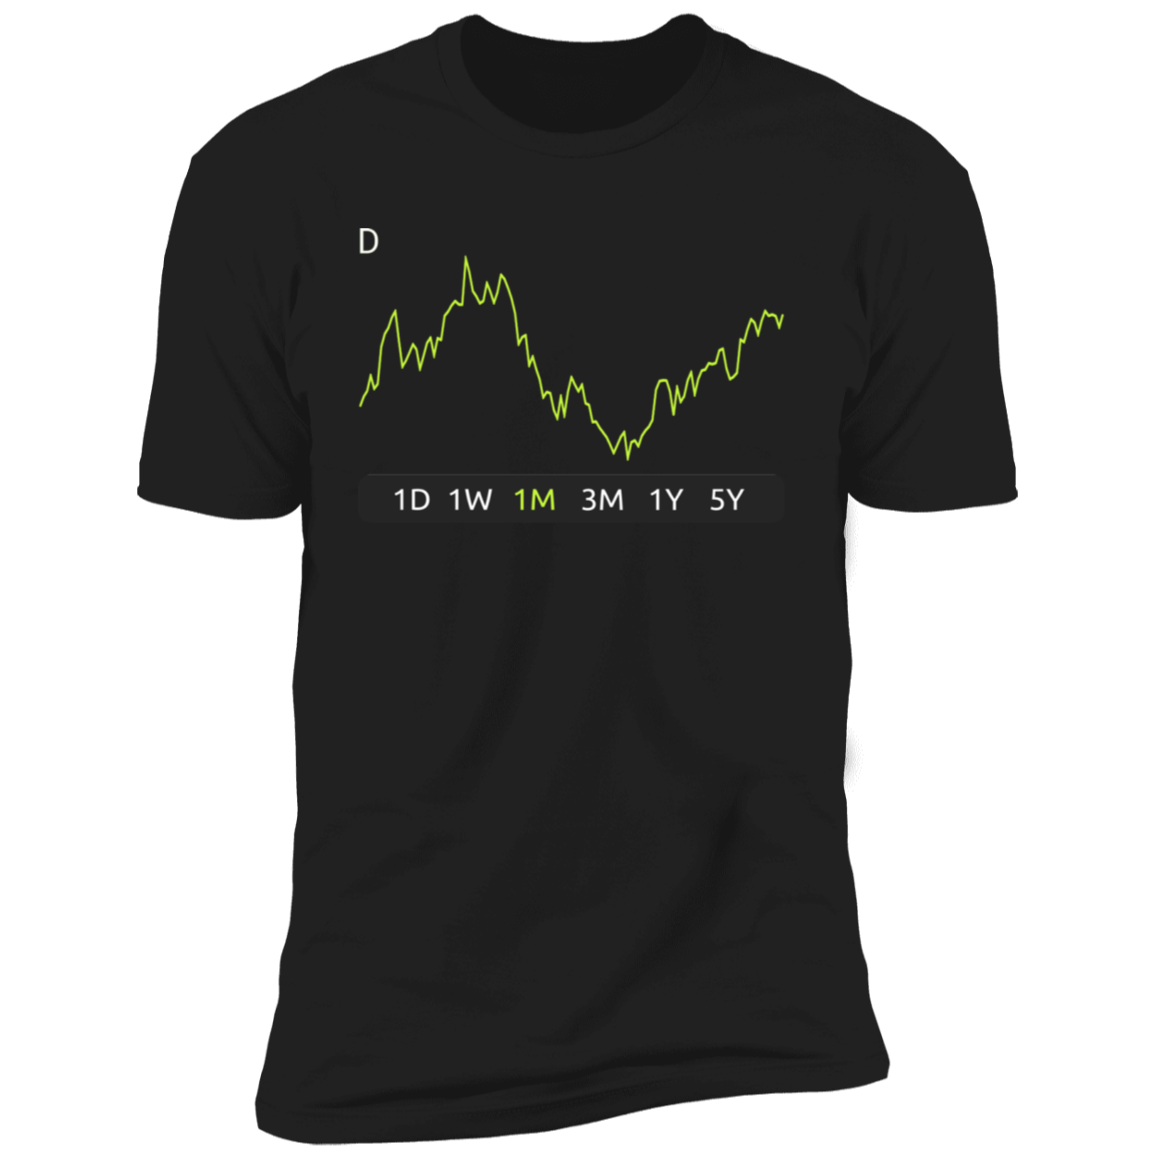 D Stock 1m Premium T-Shirt